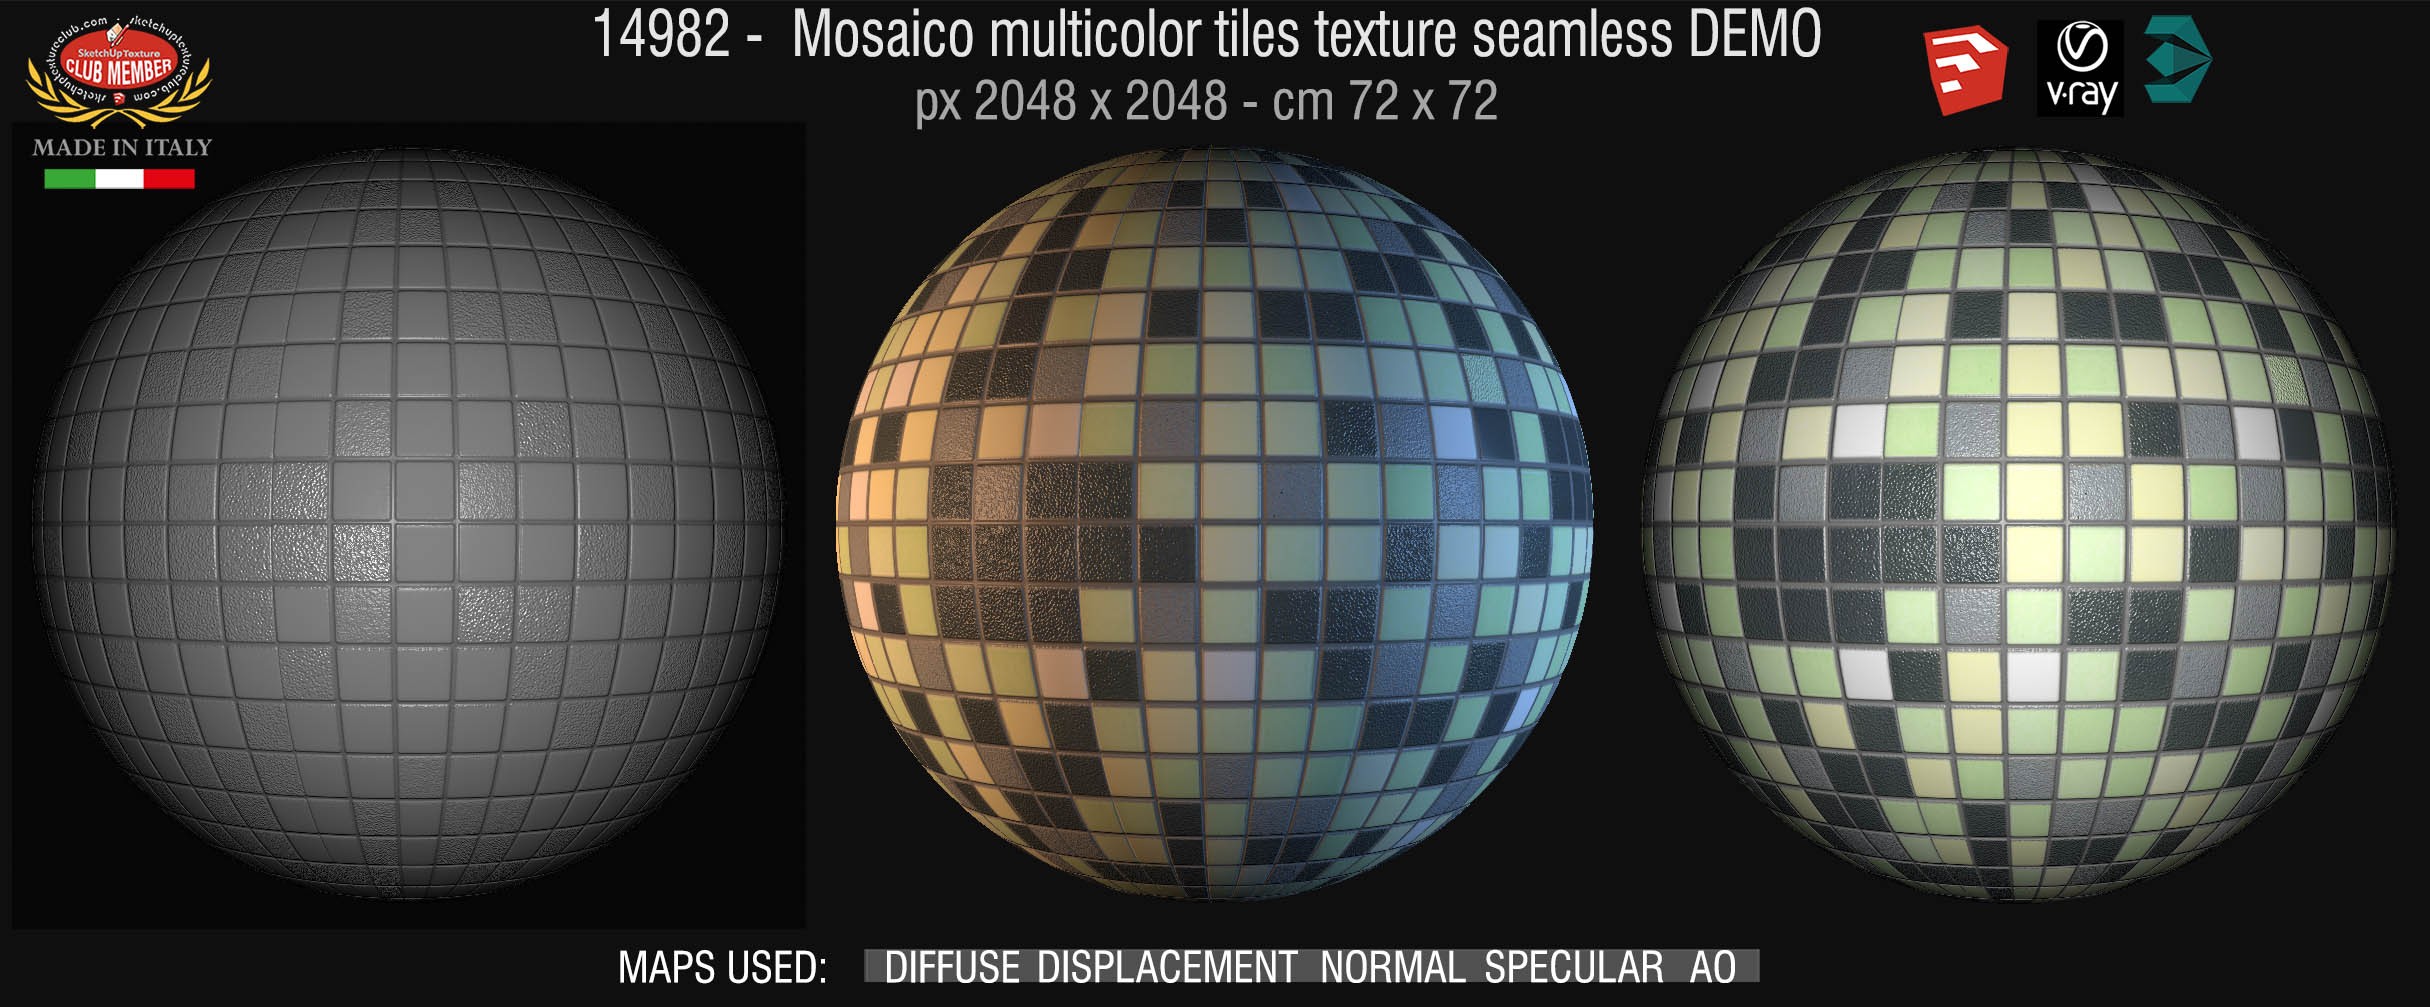 14982 Mosaico multicolor tiles texture seamless + maps DEMO